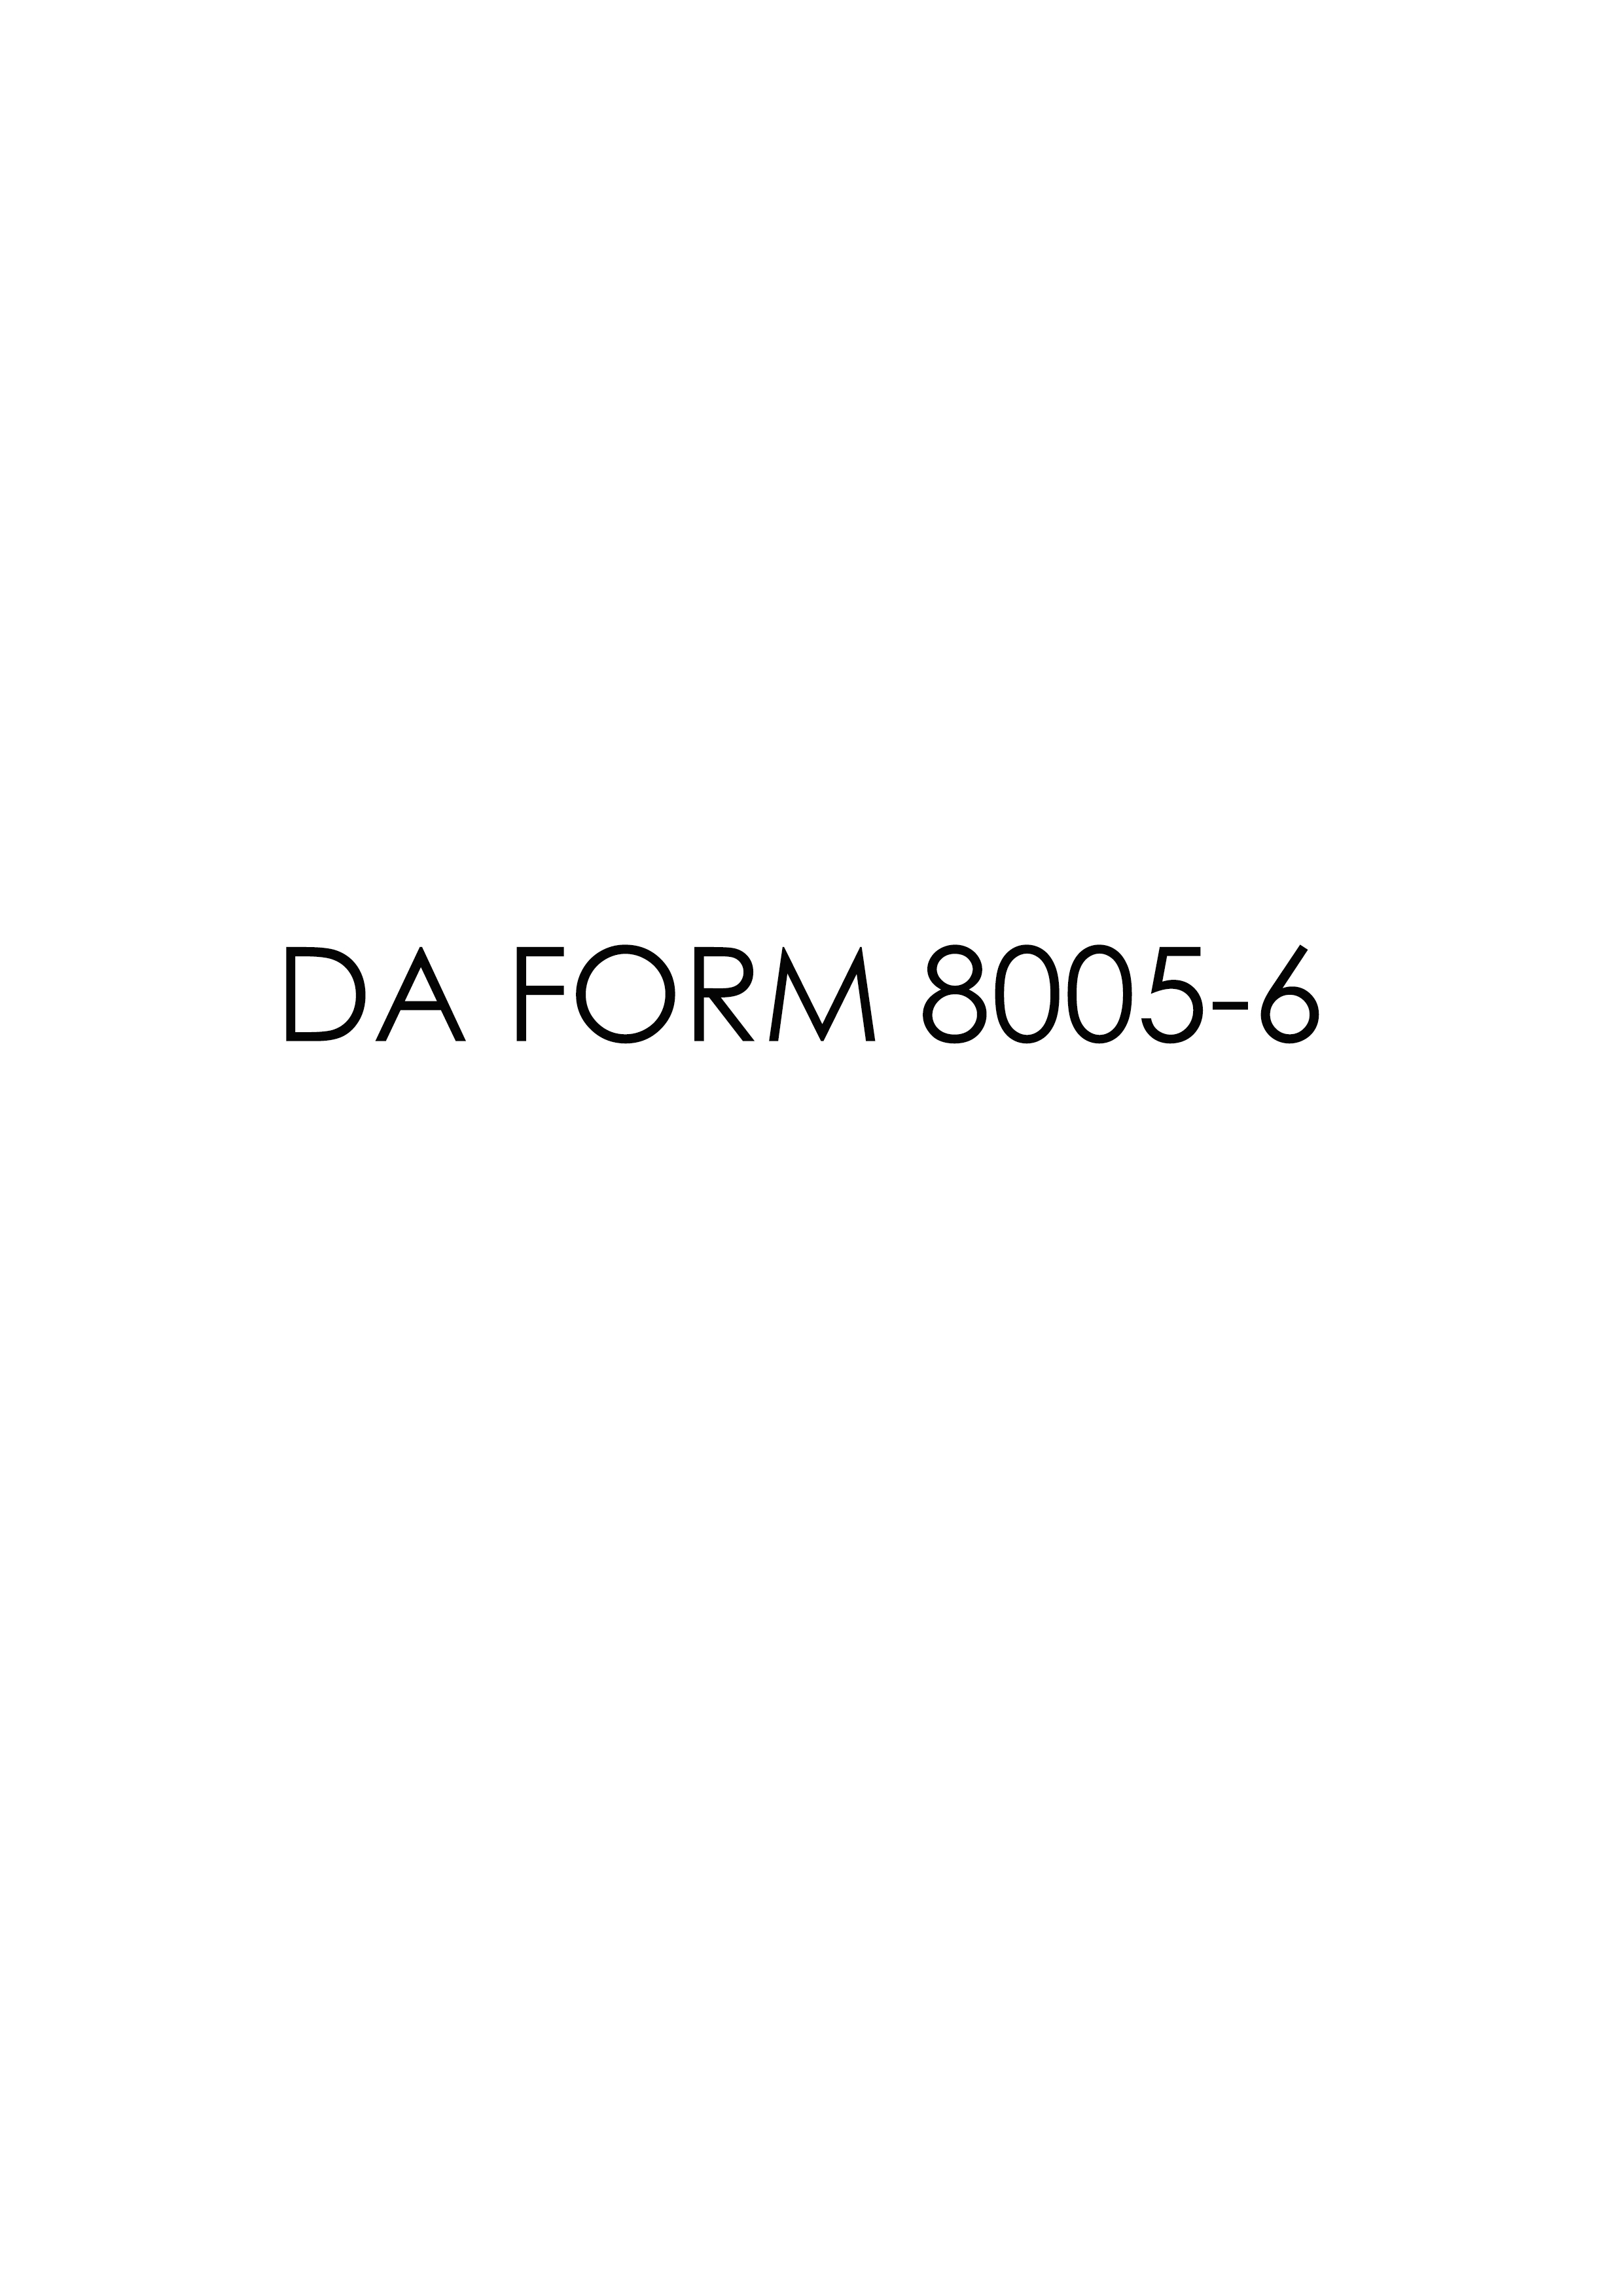 Download da form 8005-6